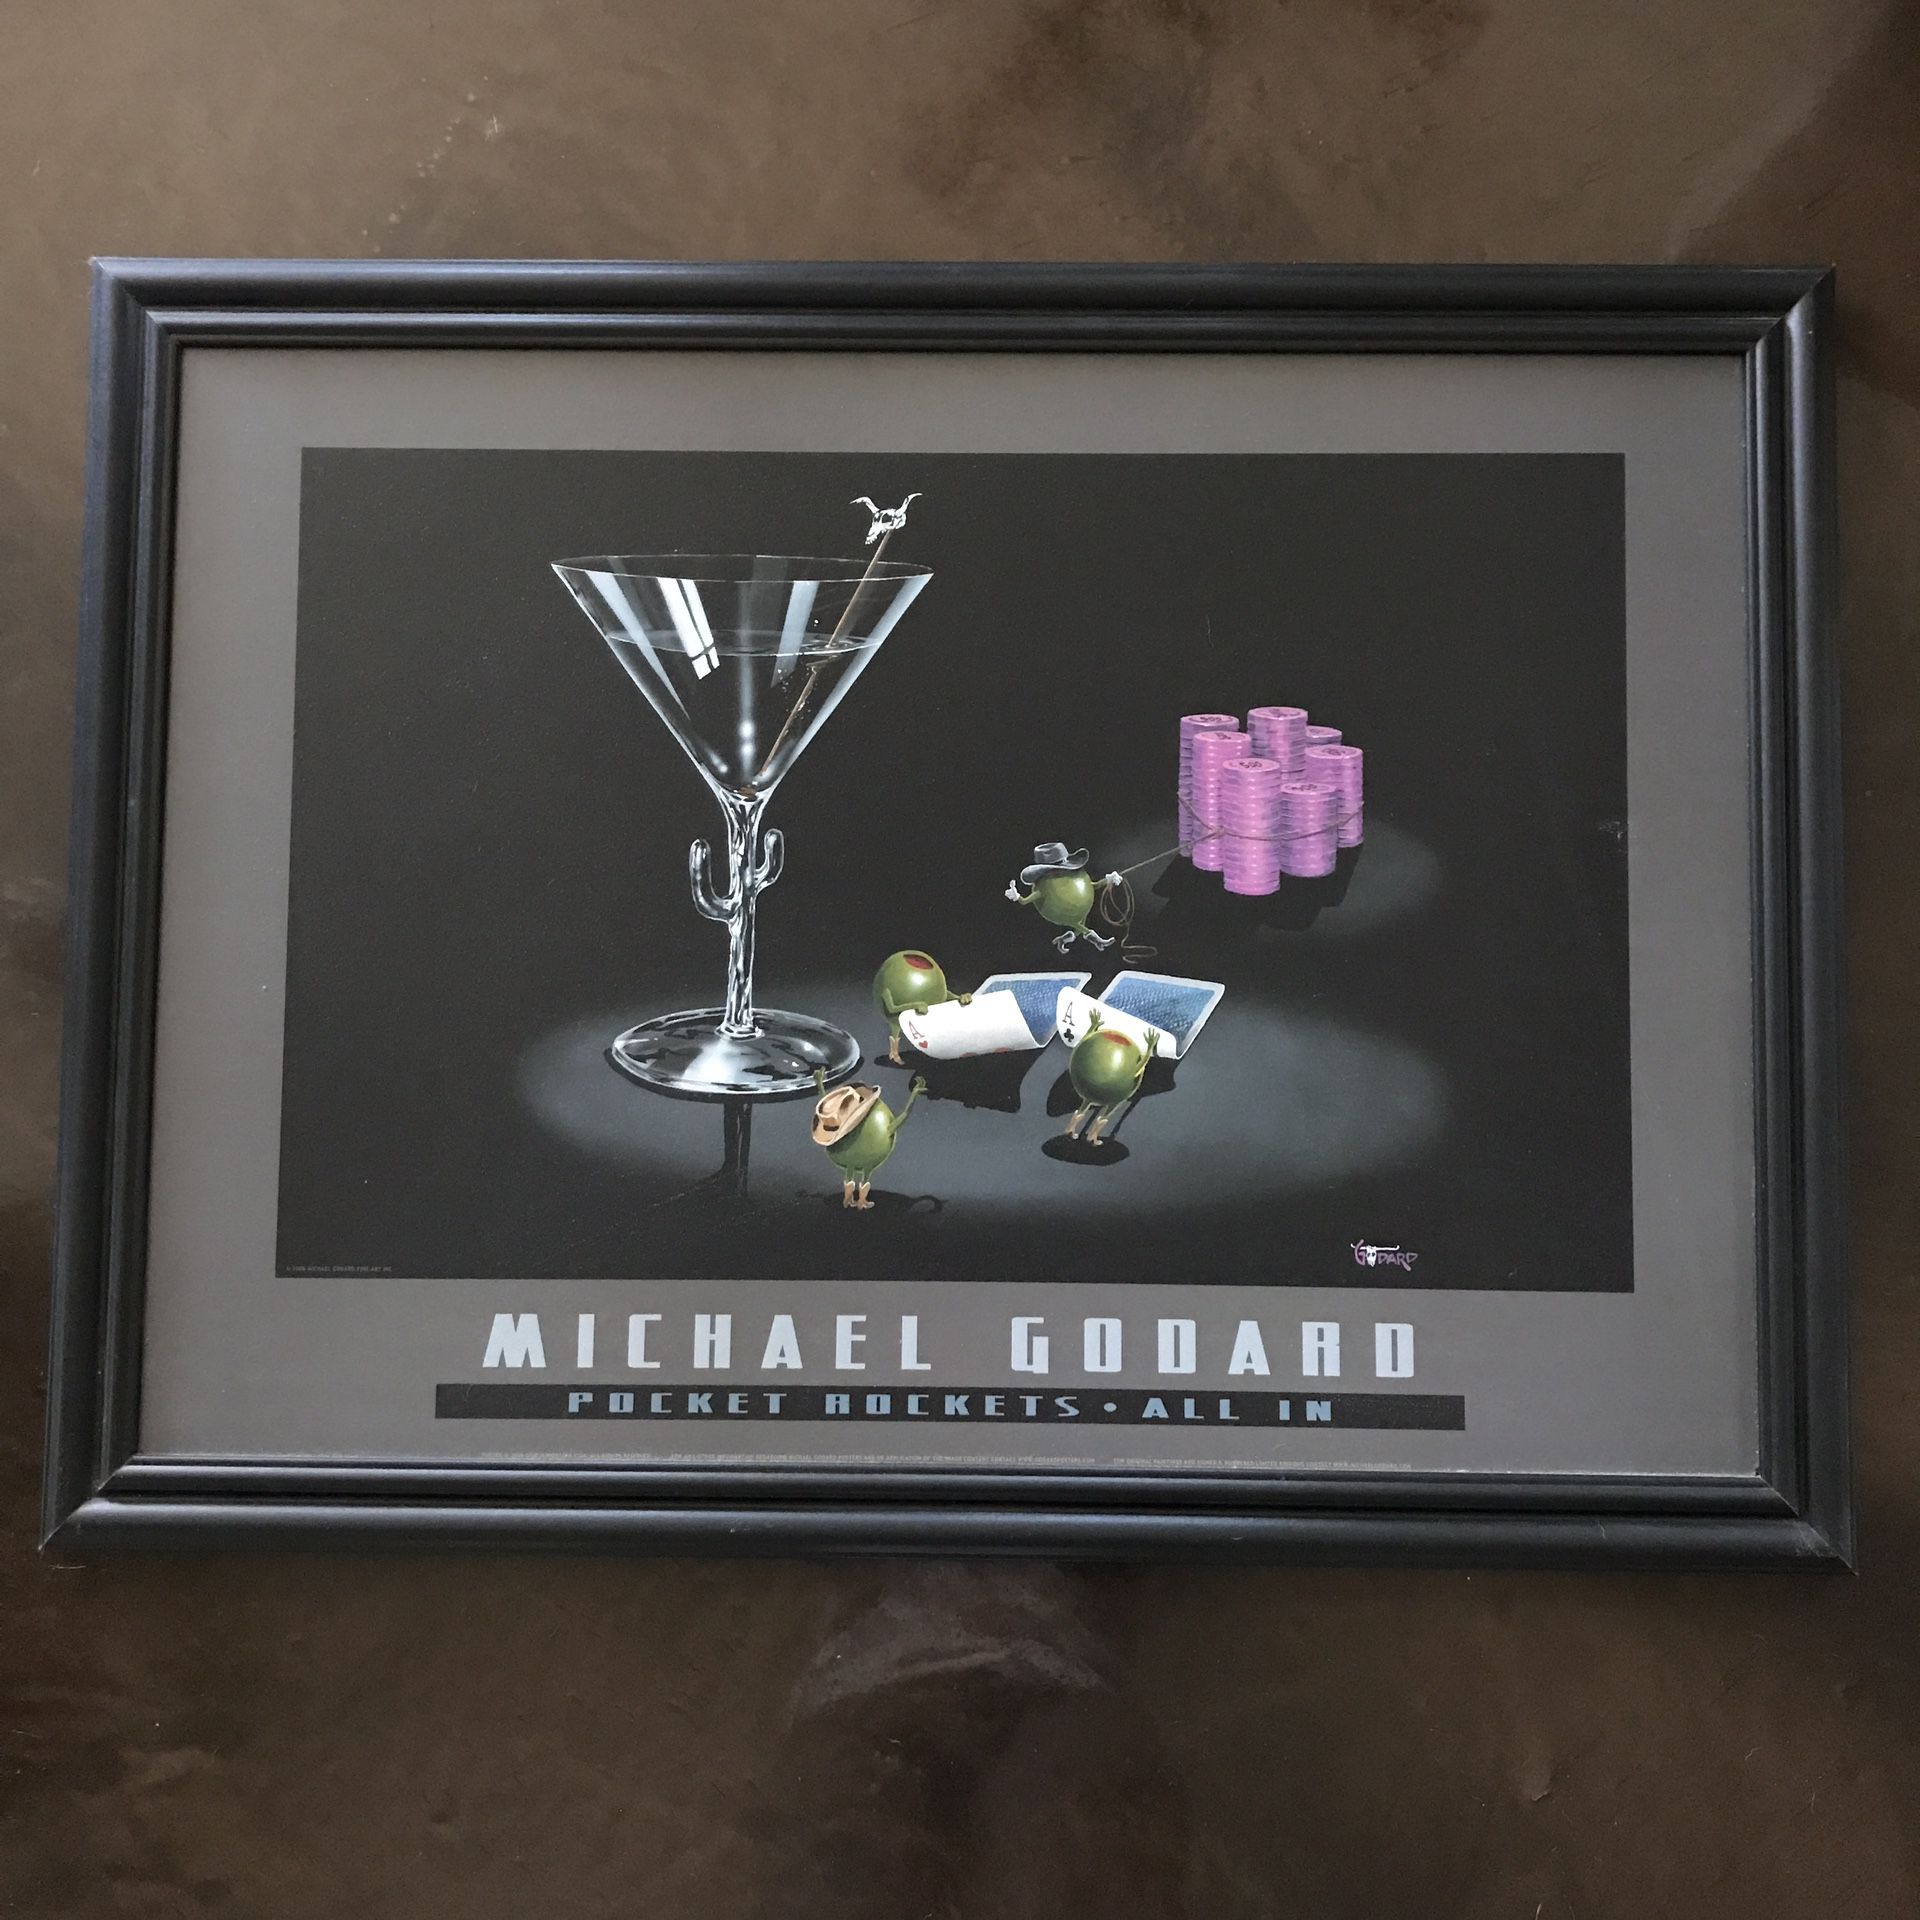 Michael Godard Pocket Rockets All In Fine Art Print Wall Art Framed